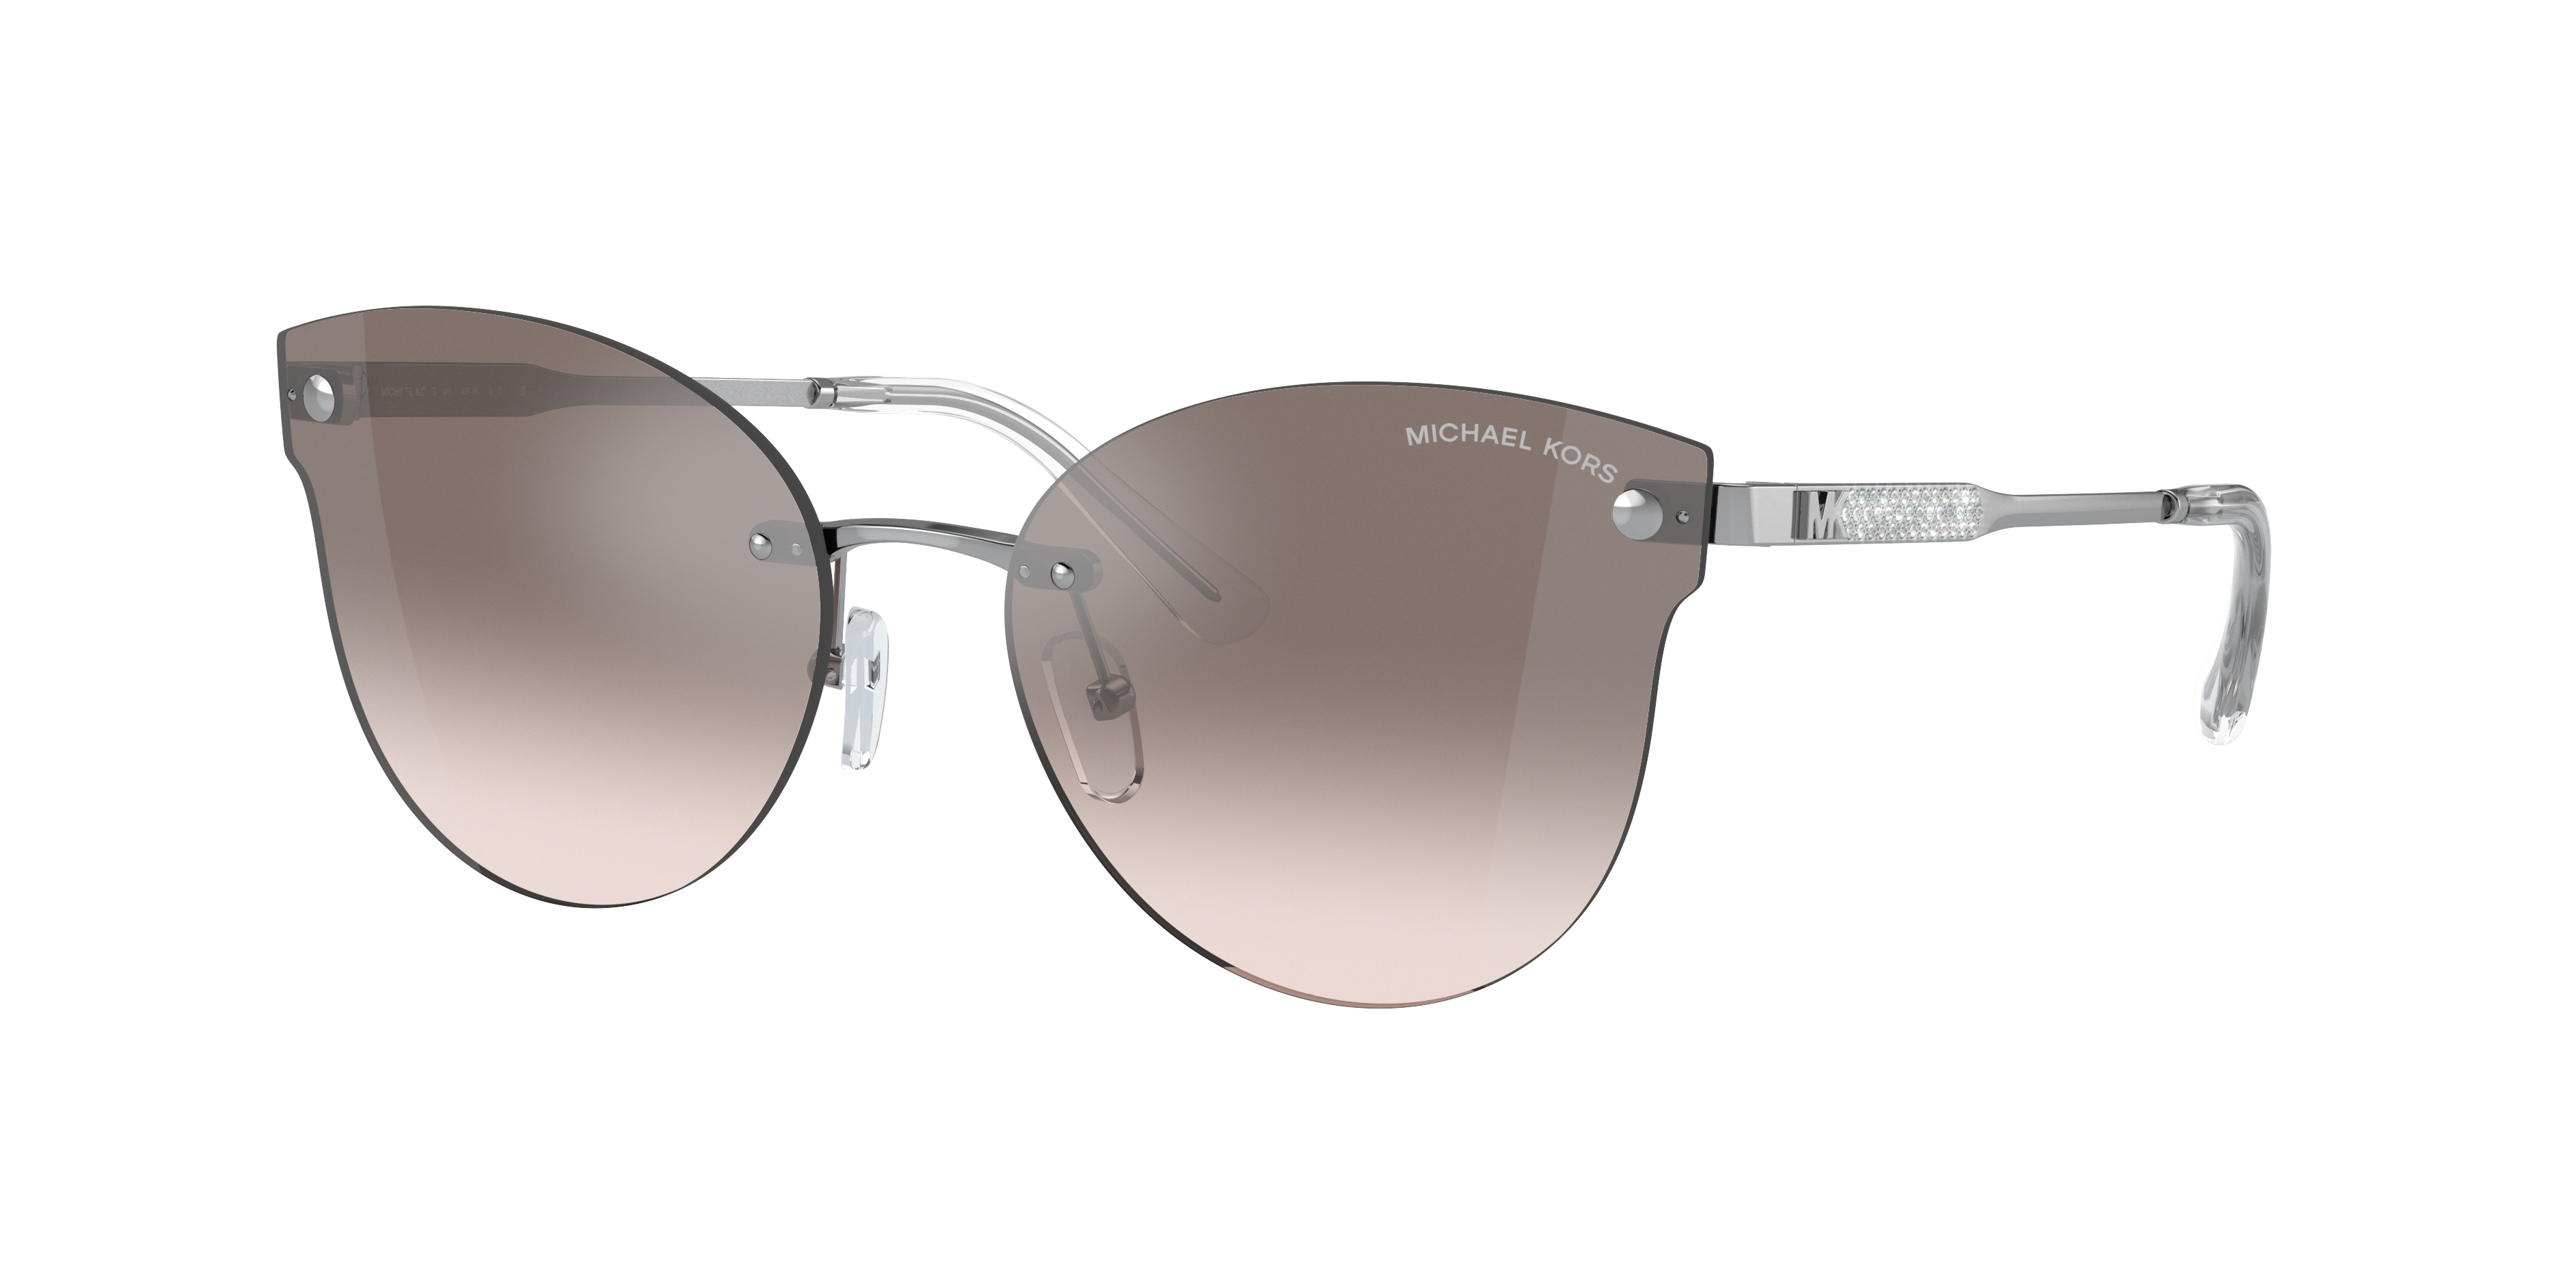 Michael Kors Sunglasses Mens 2016 Poland SAVE 58  pivphuketcom